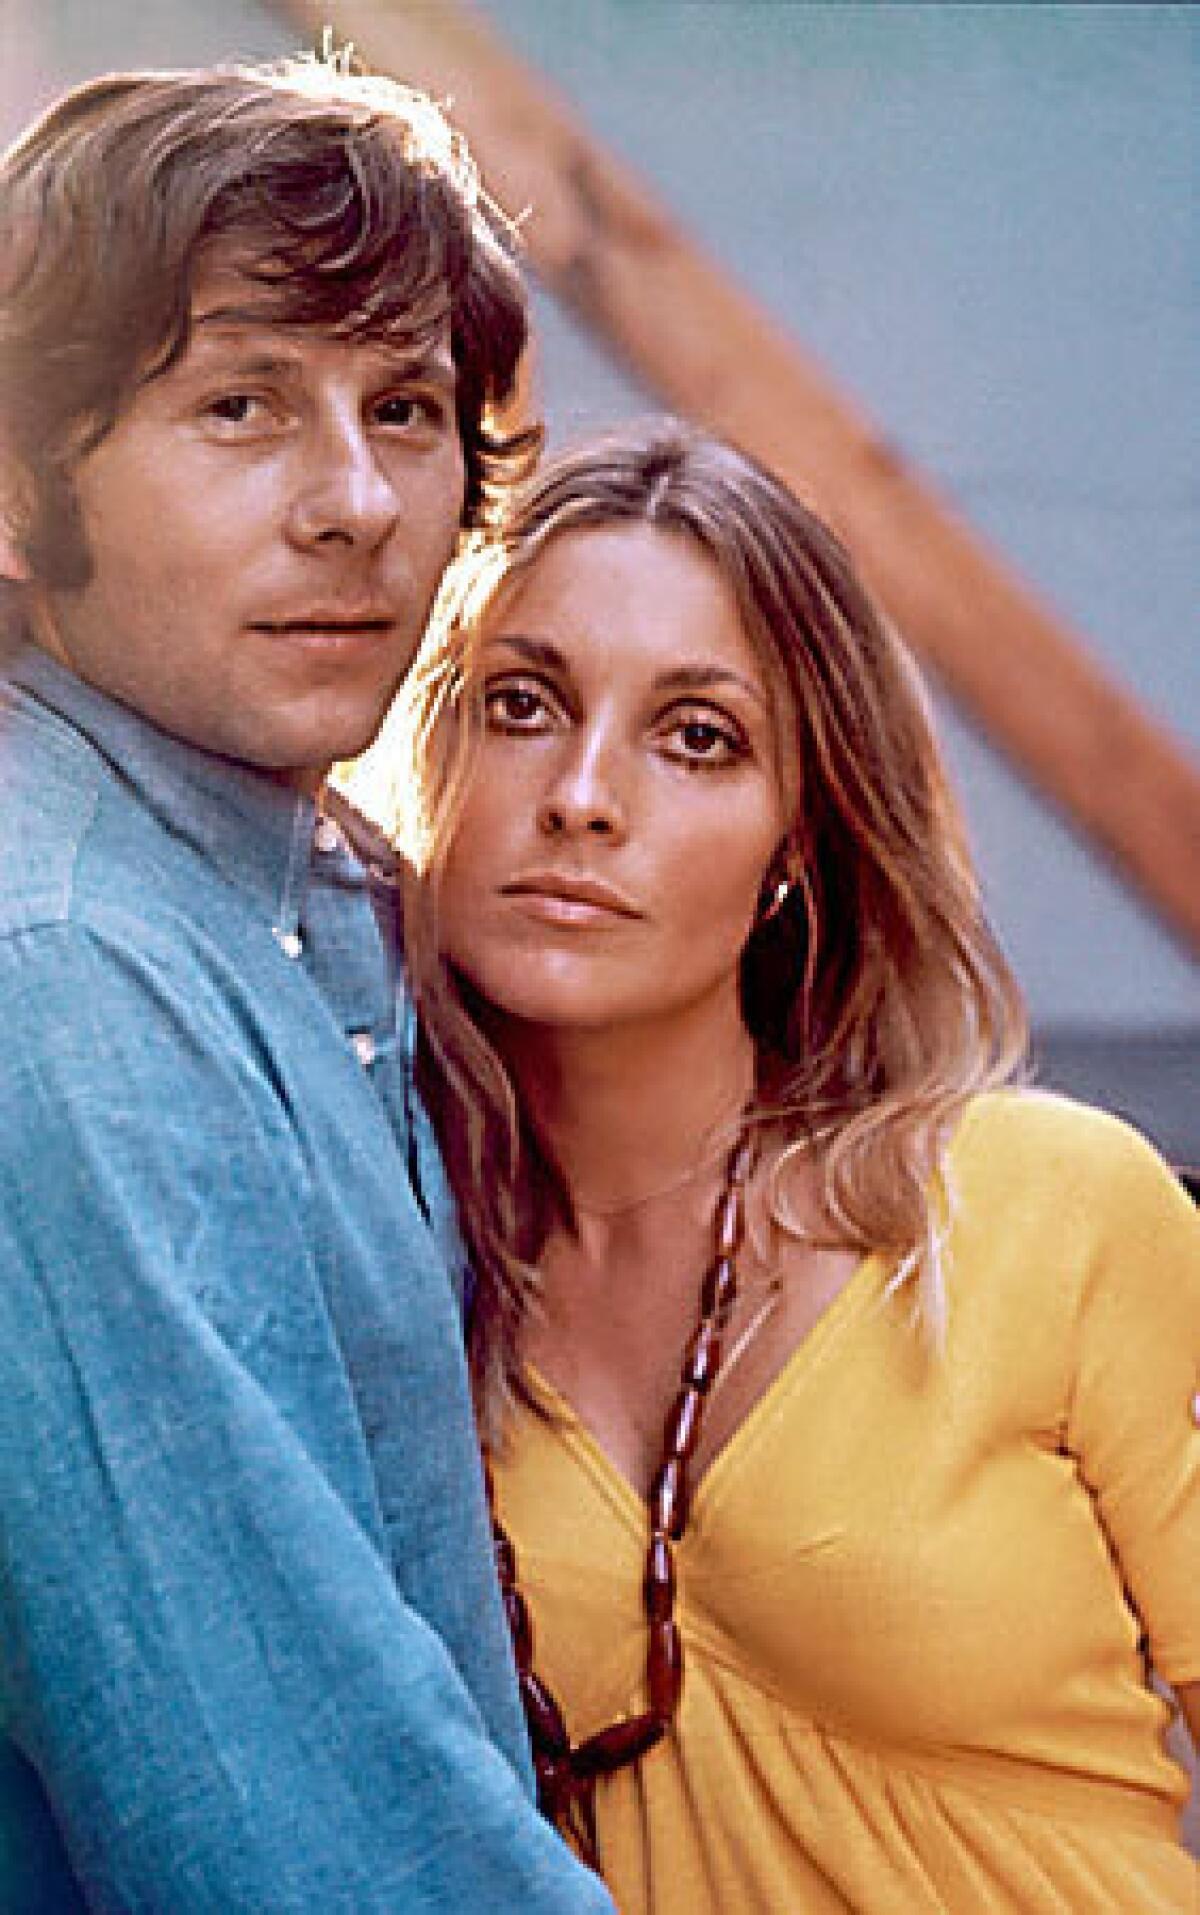 Roman Polanski and Sharon Tate in the 1960s.